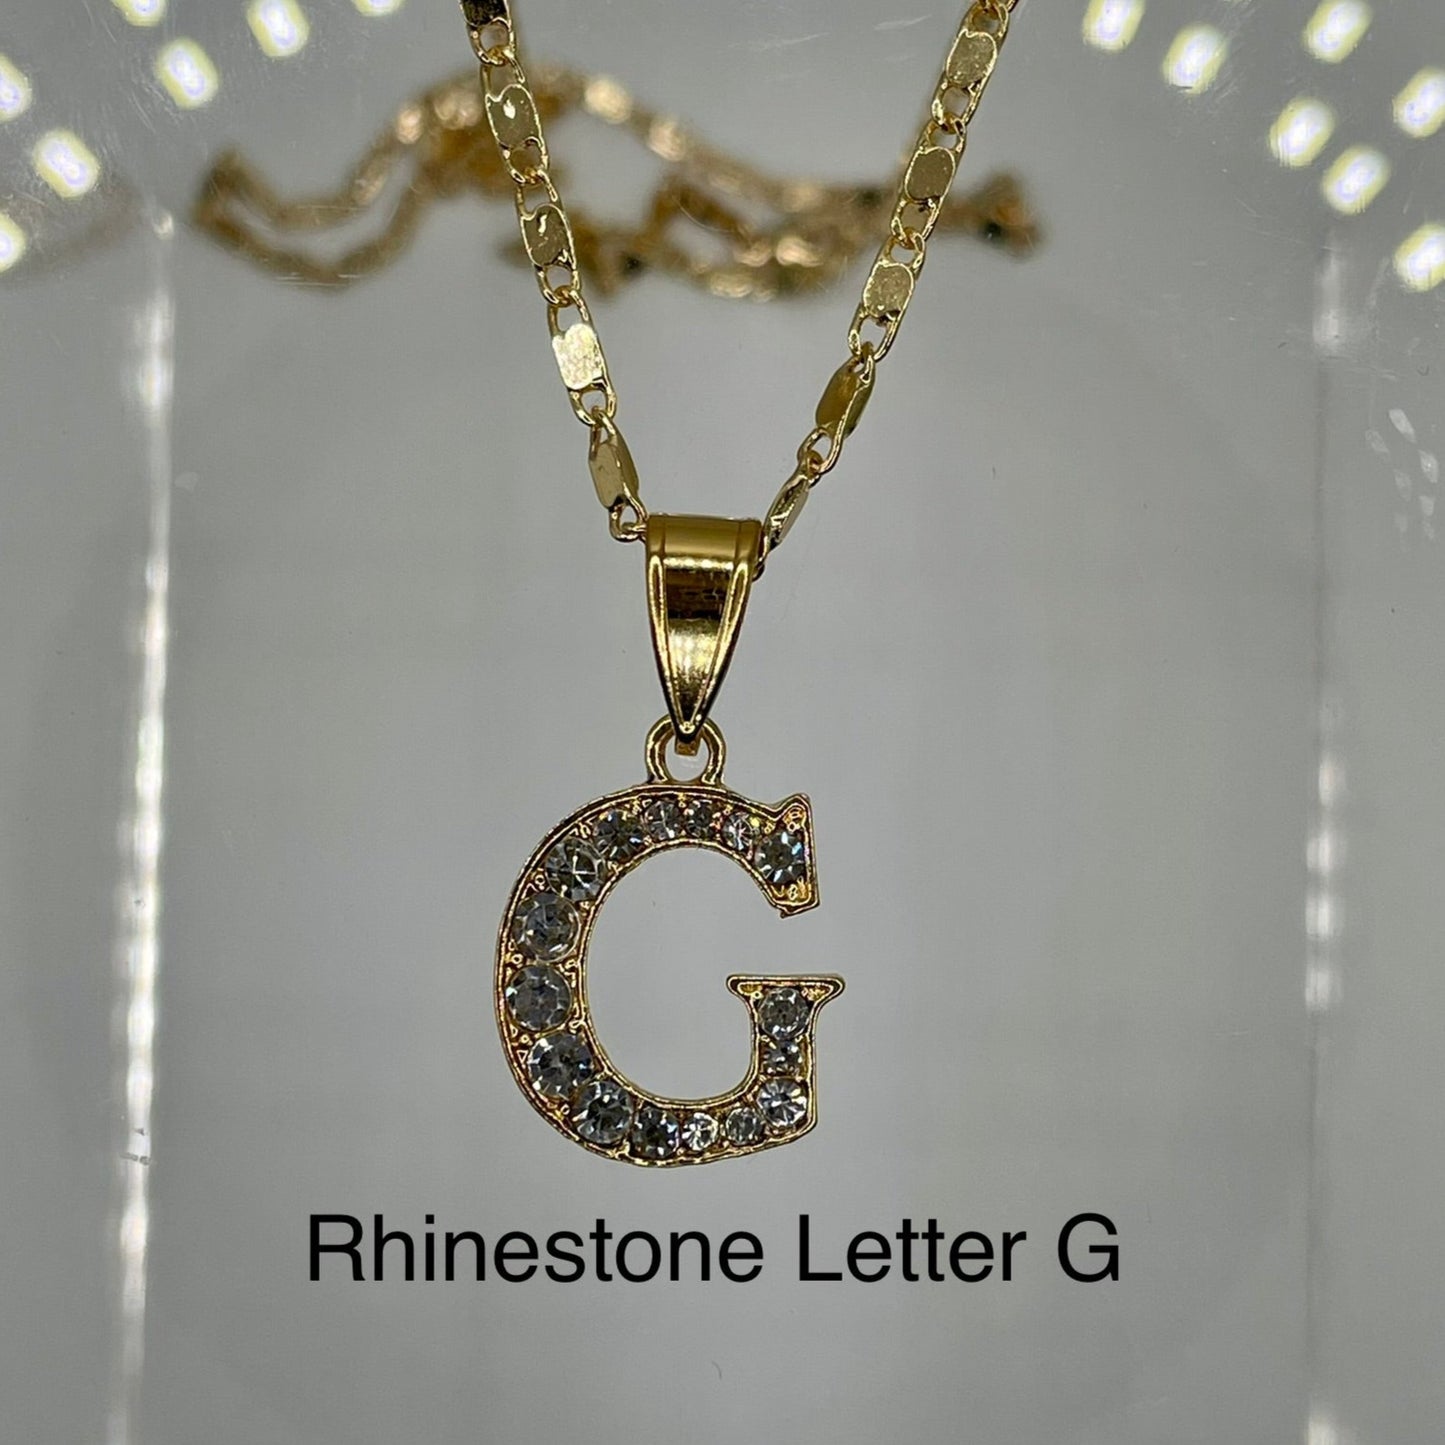 Rhinestone letter G pendant 14k gold plated on gold plated cute necklace. Letter pendants.